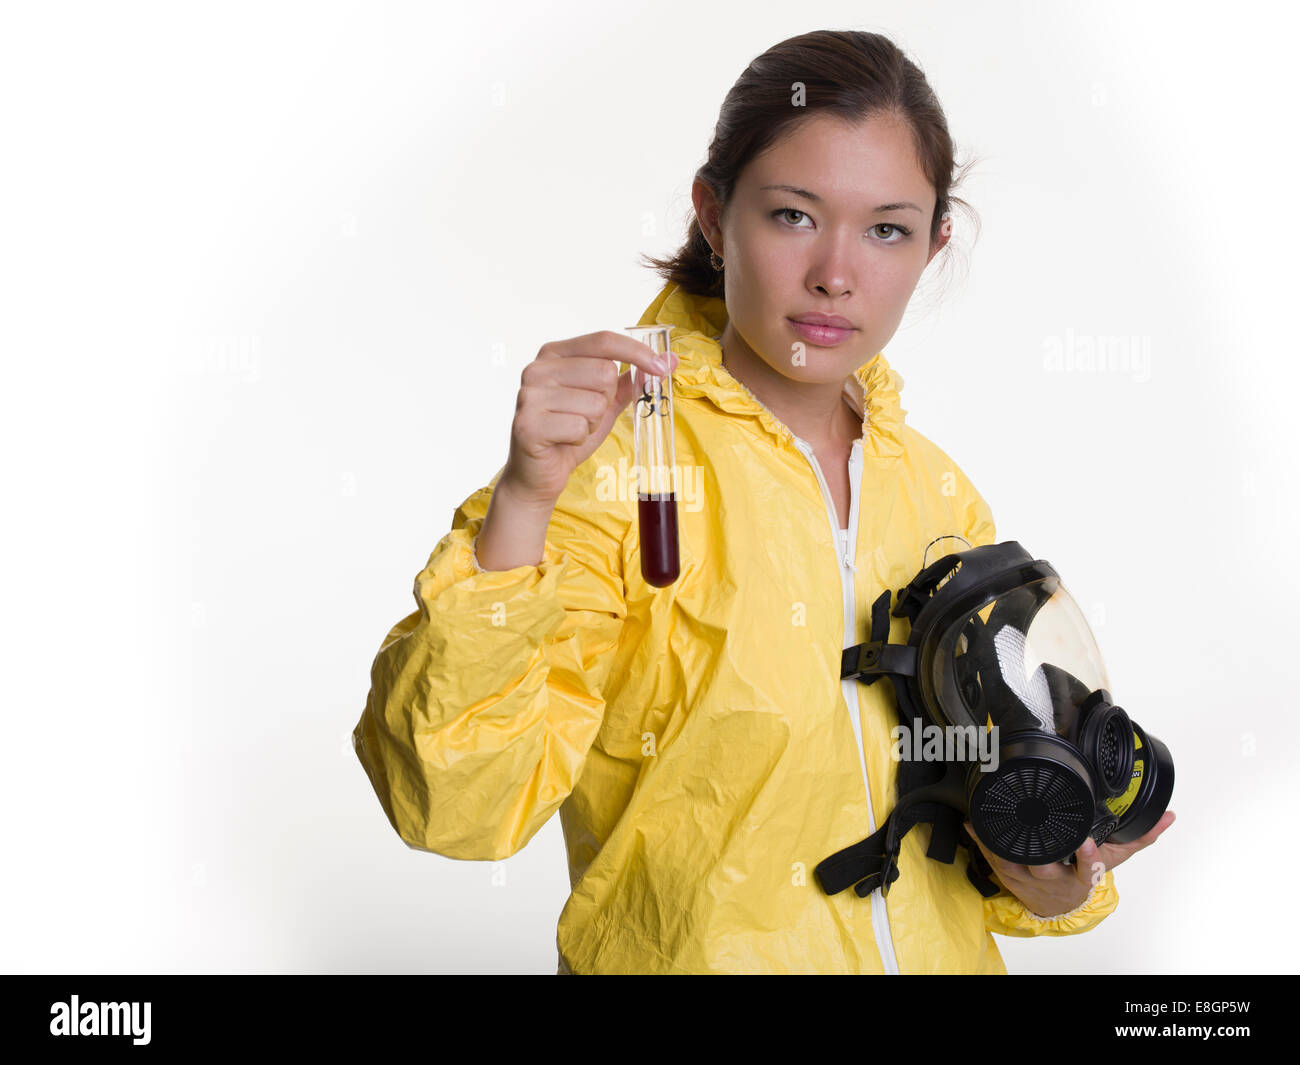 Woman with hazmat hazardous materials suit and gas mask Stock Photo